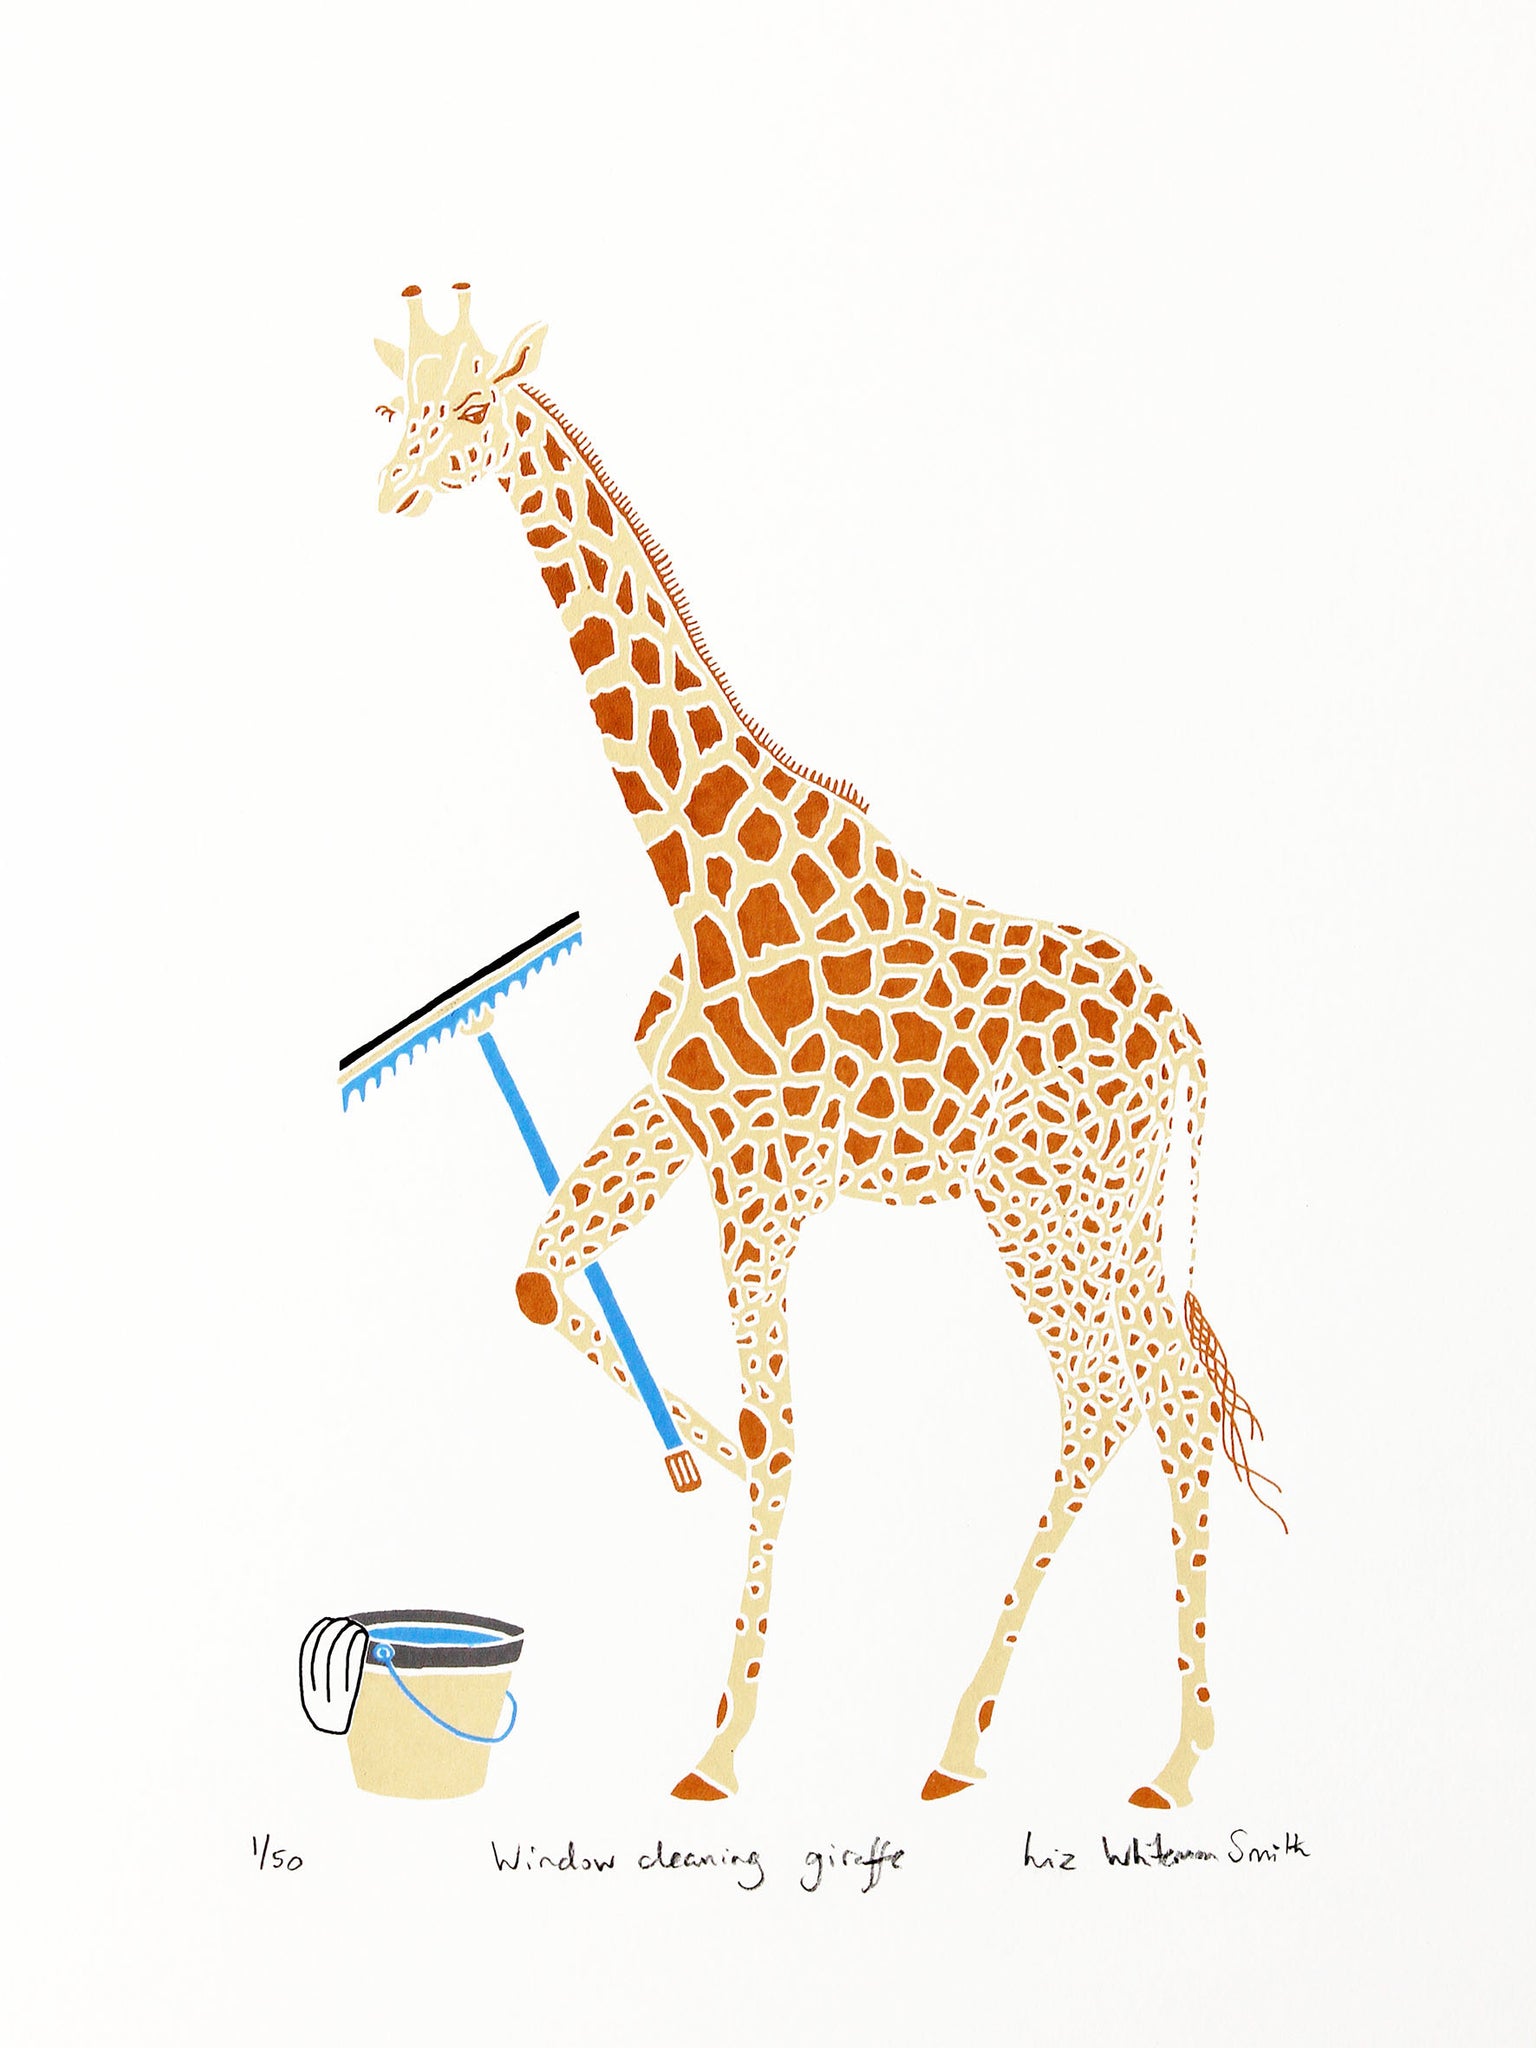 Window cleaning giraffe